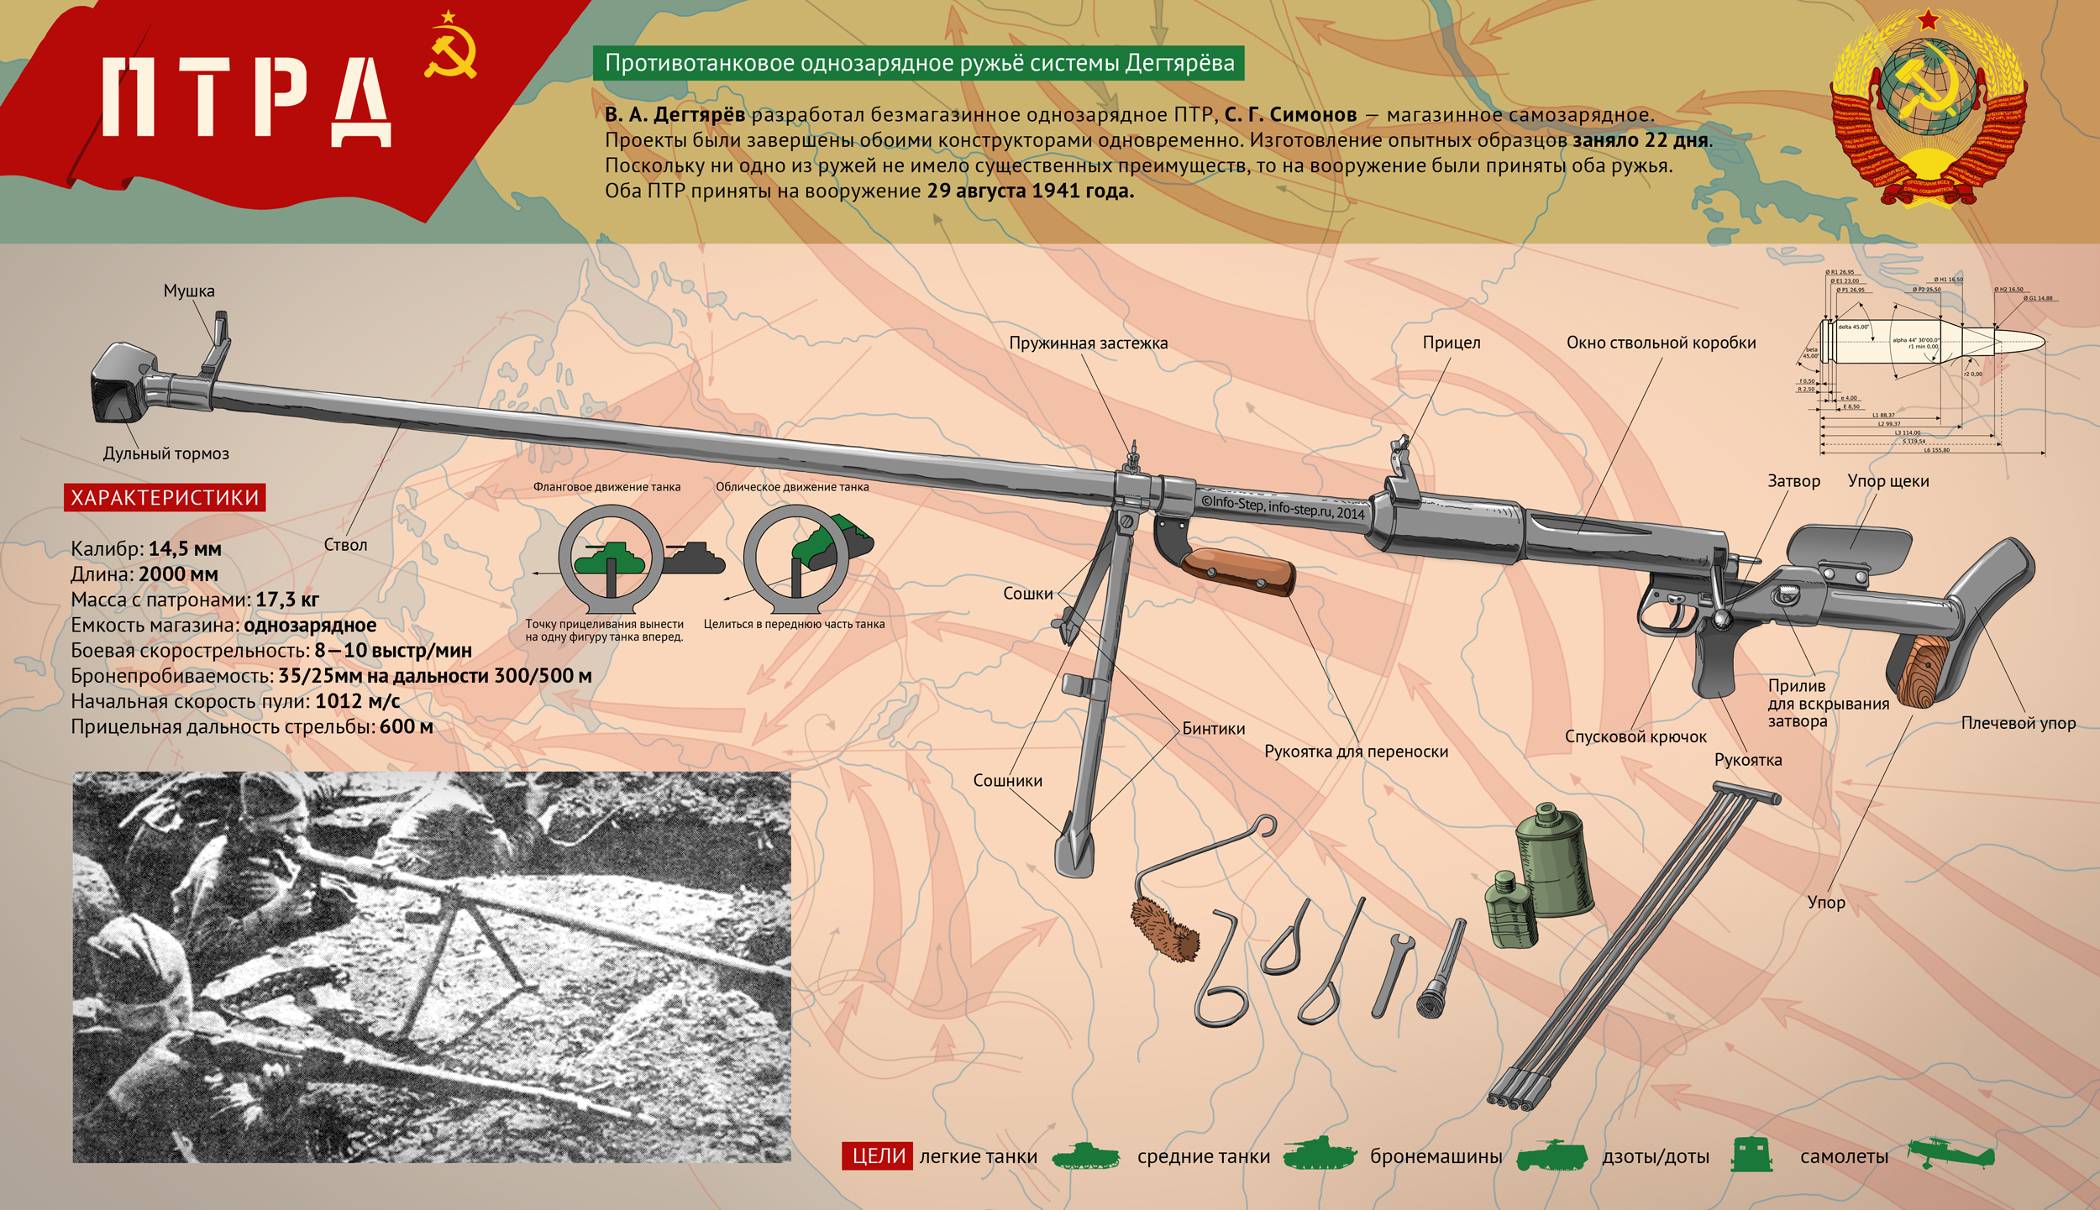 Weaponplace.ru - ружье противотанковое дегтярева (птрд)